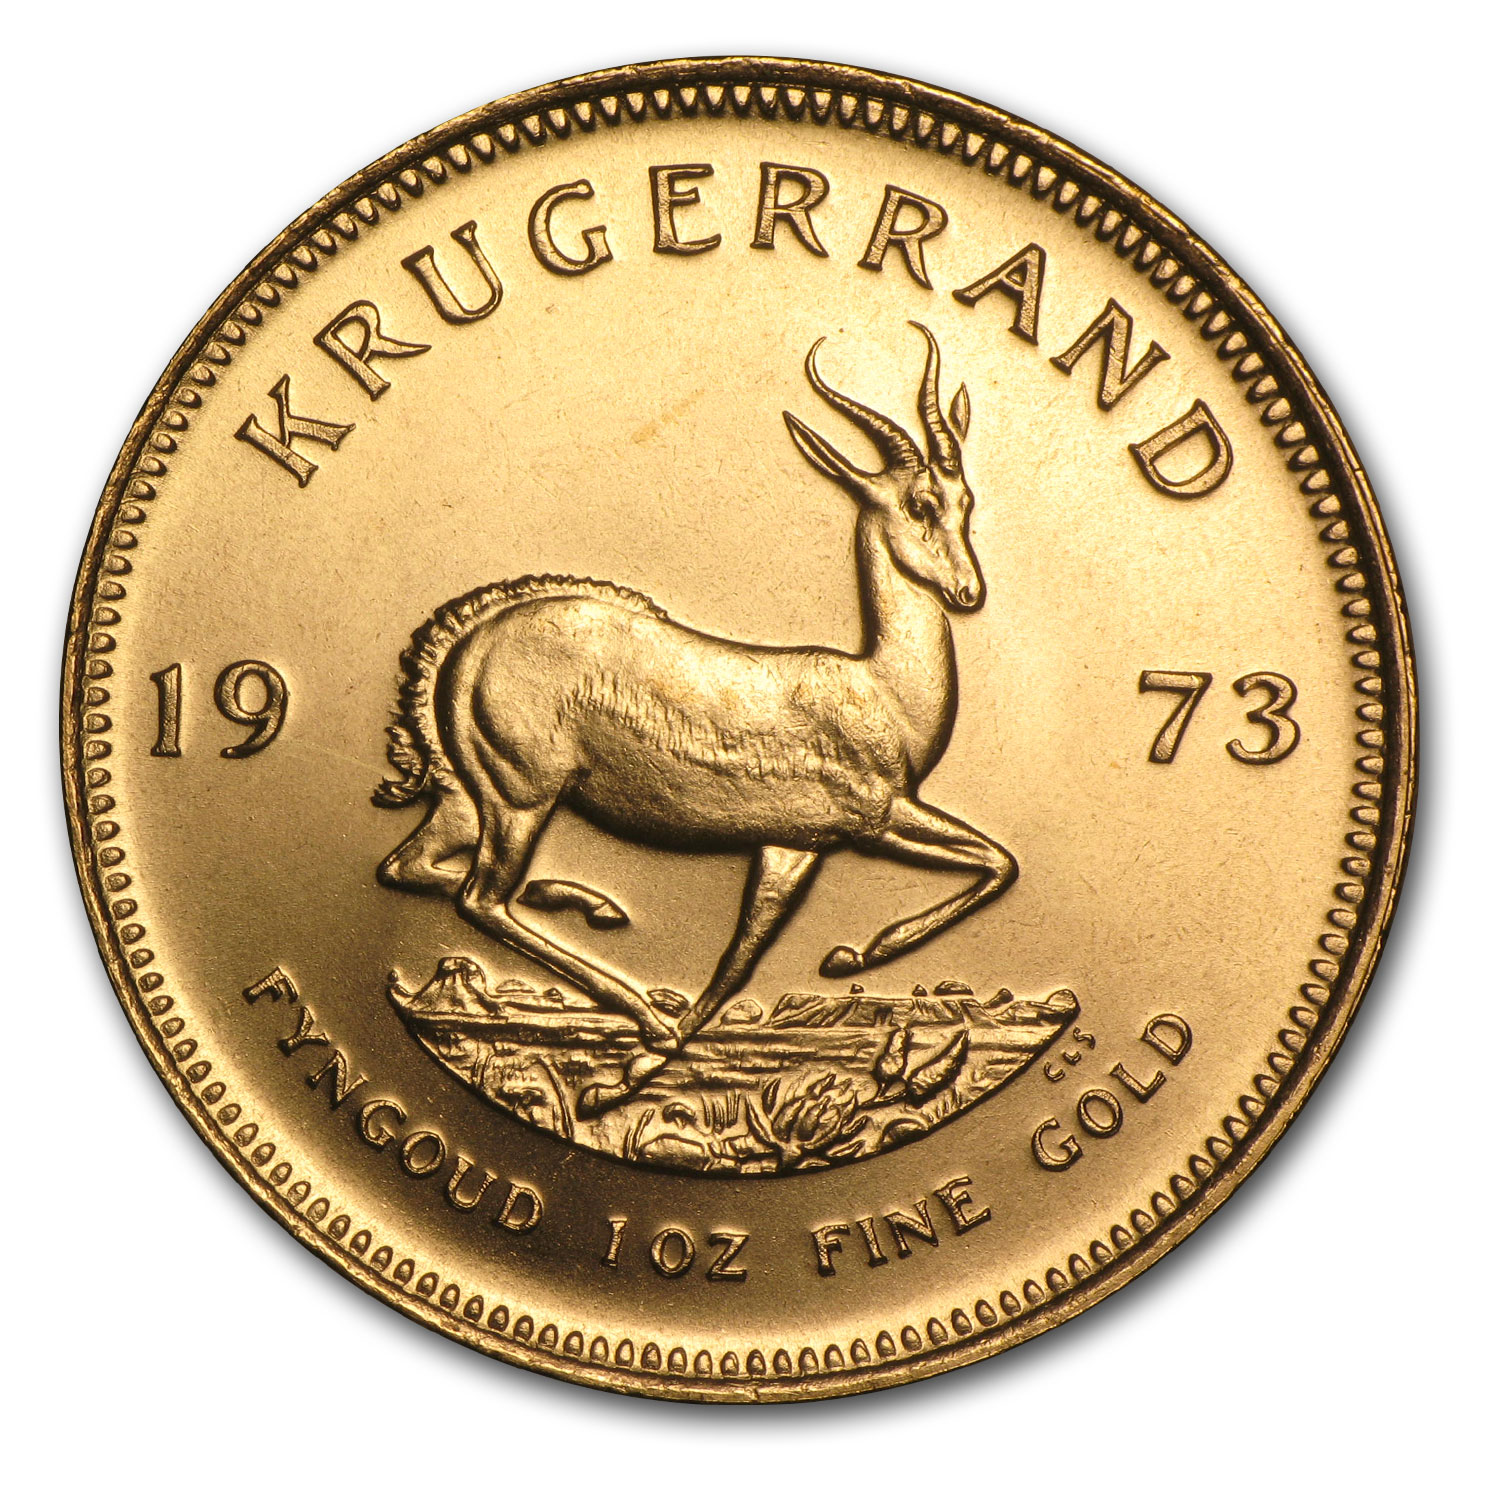 Buy 1973 South Africa 1 oz Gold Krugerrand BU - Click Image to Close